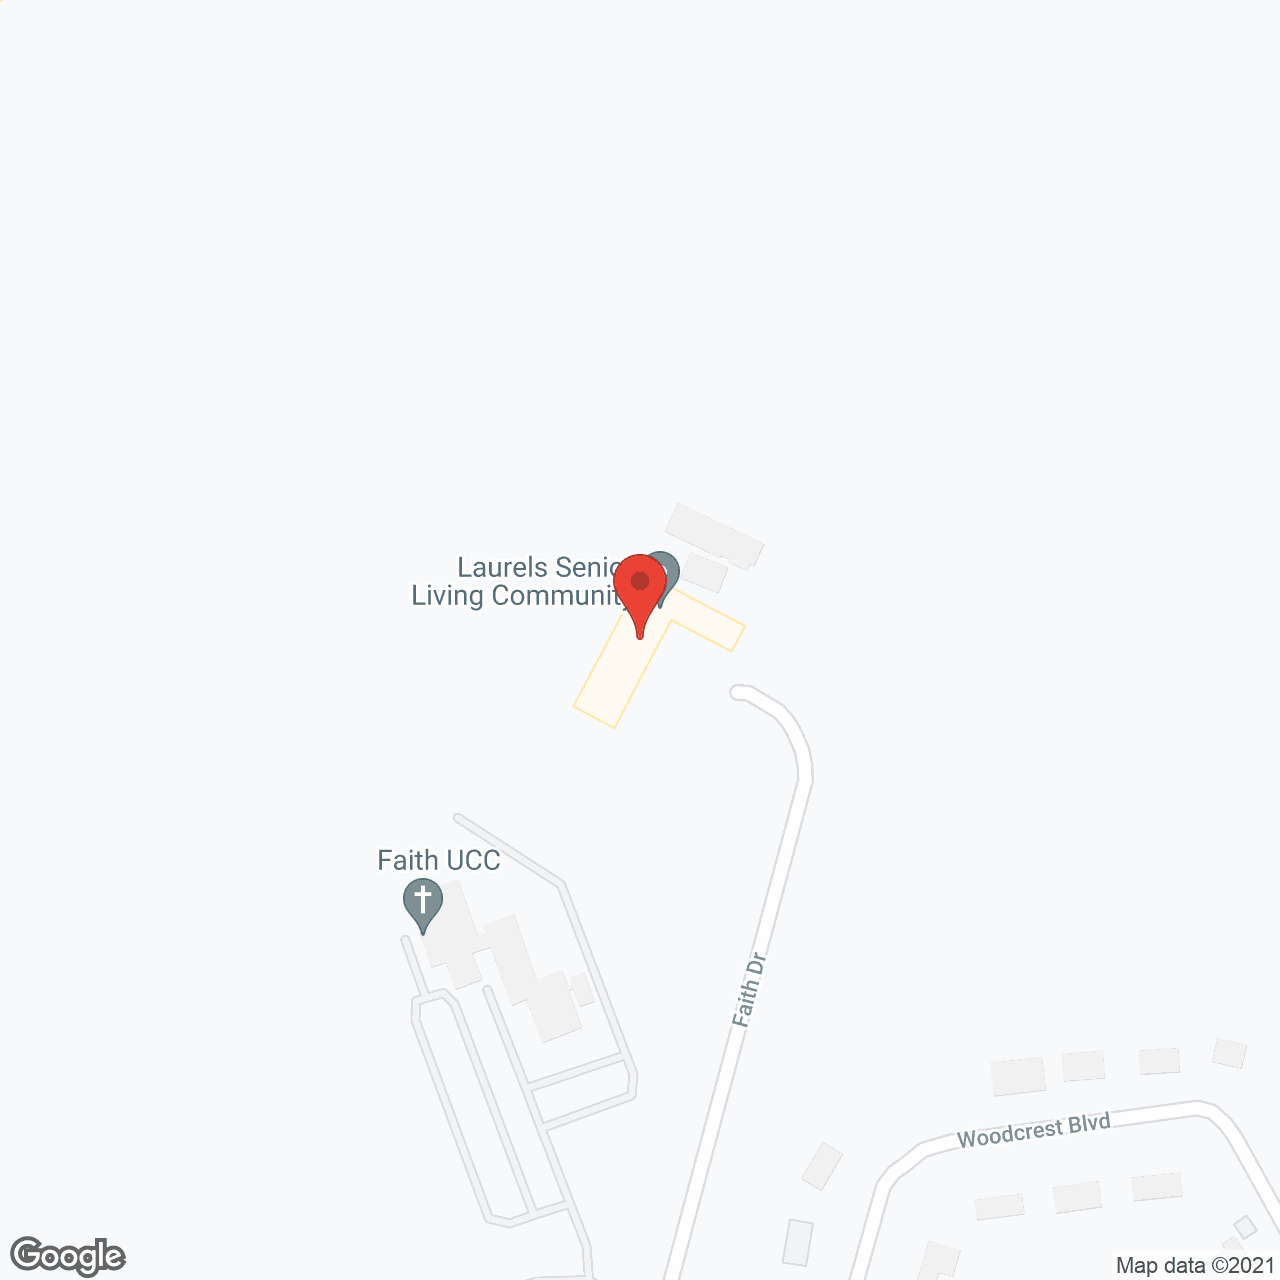 The Laurels Senior Living Community in google map